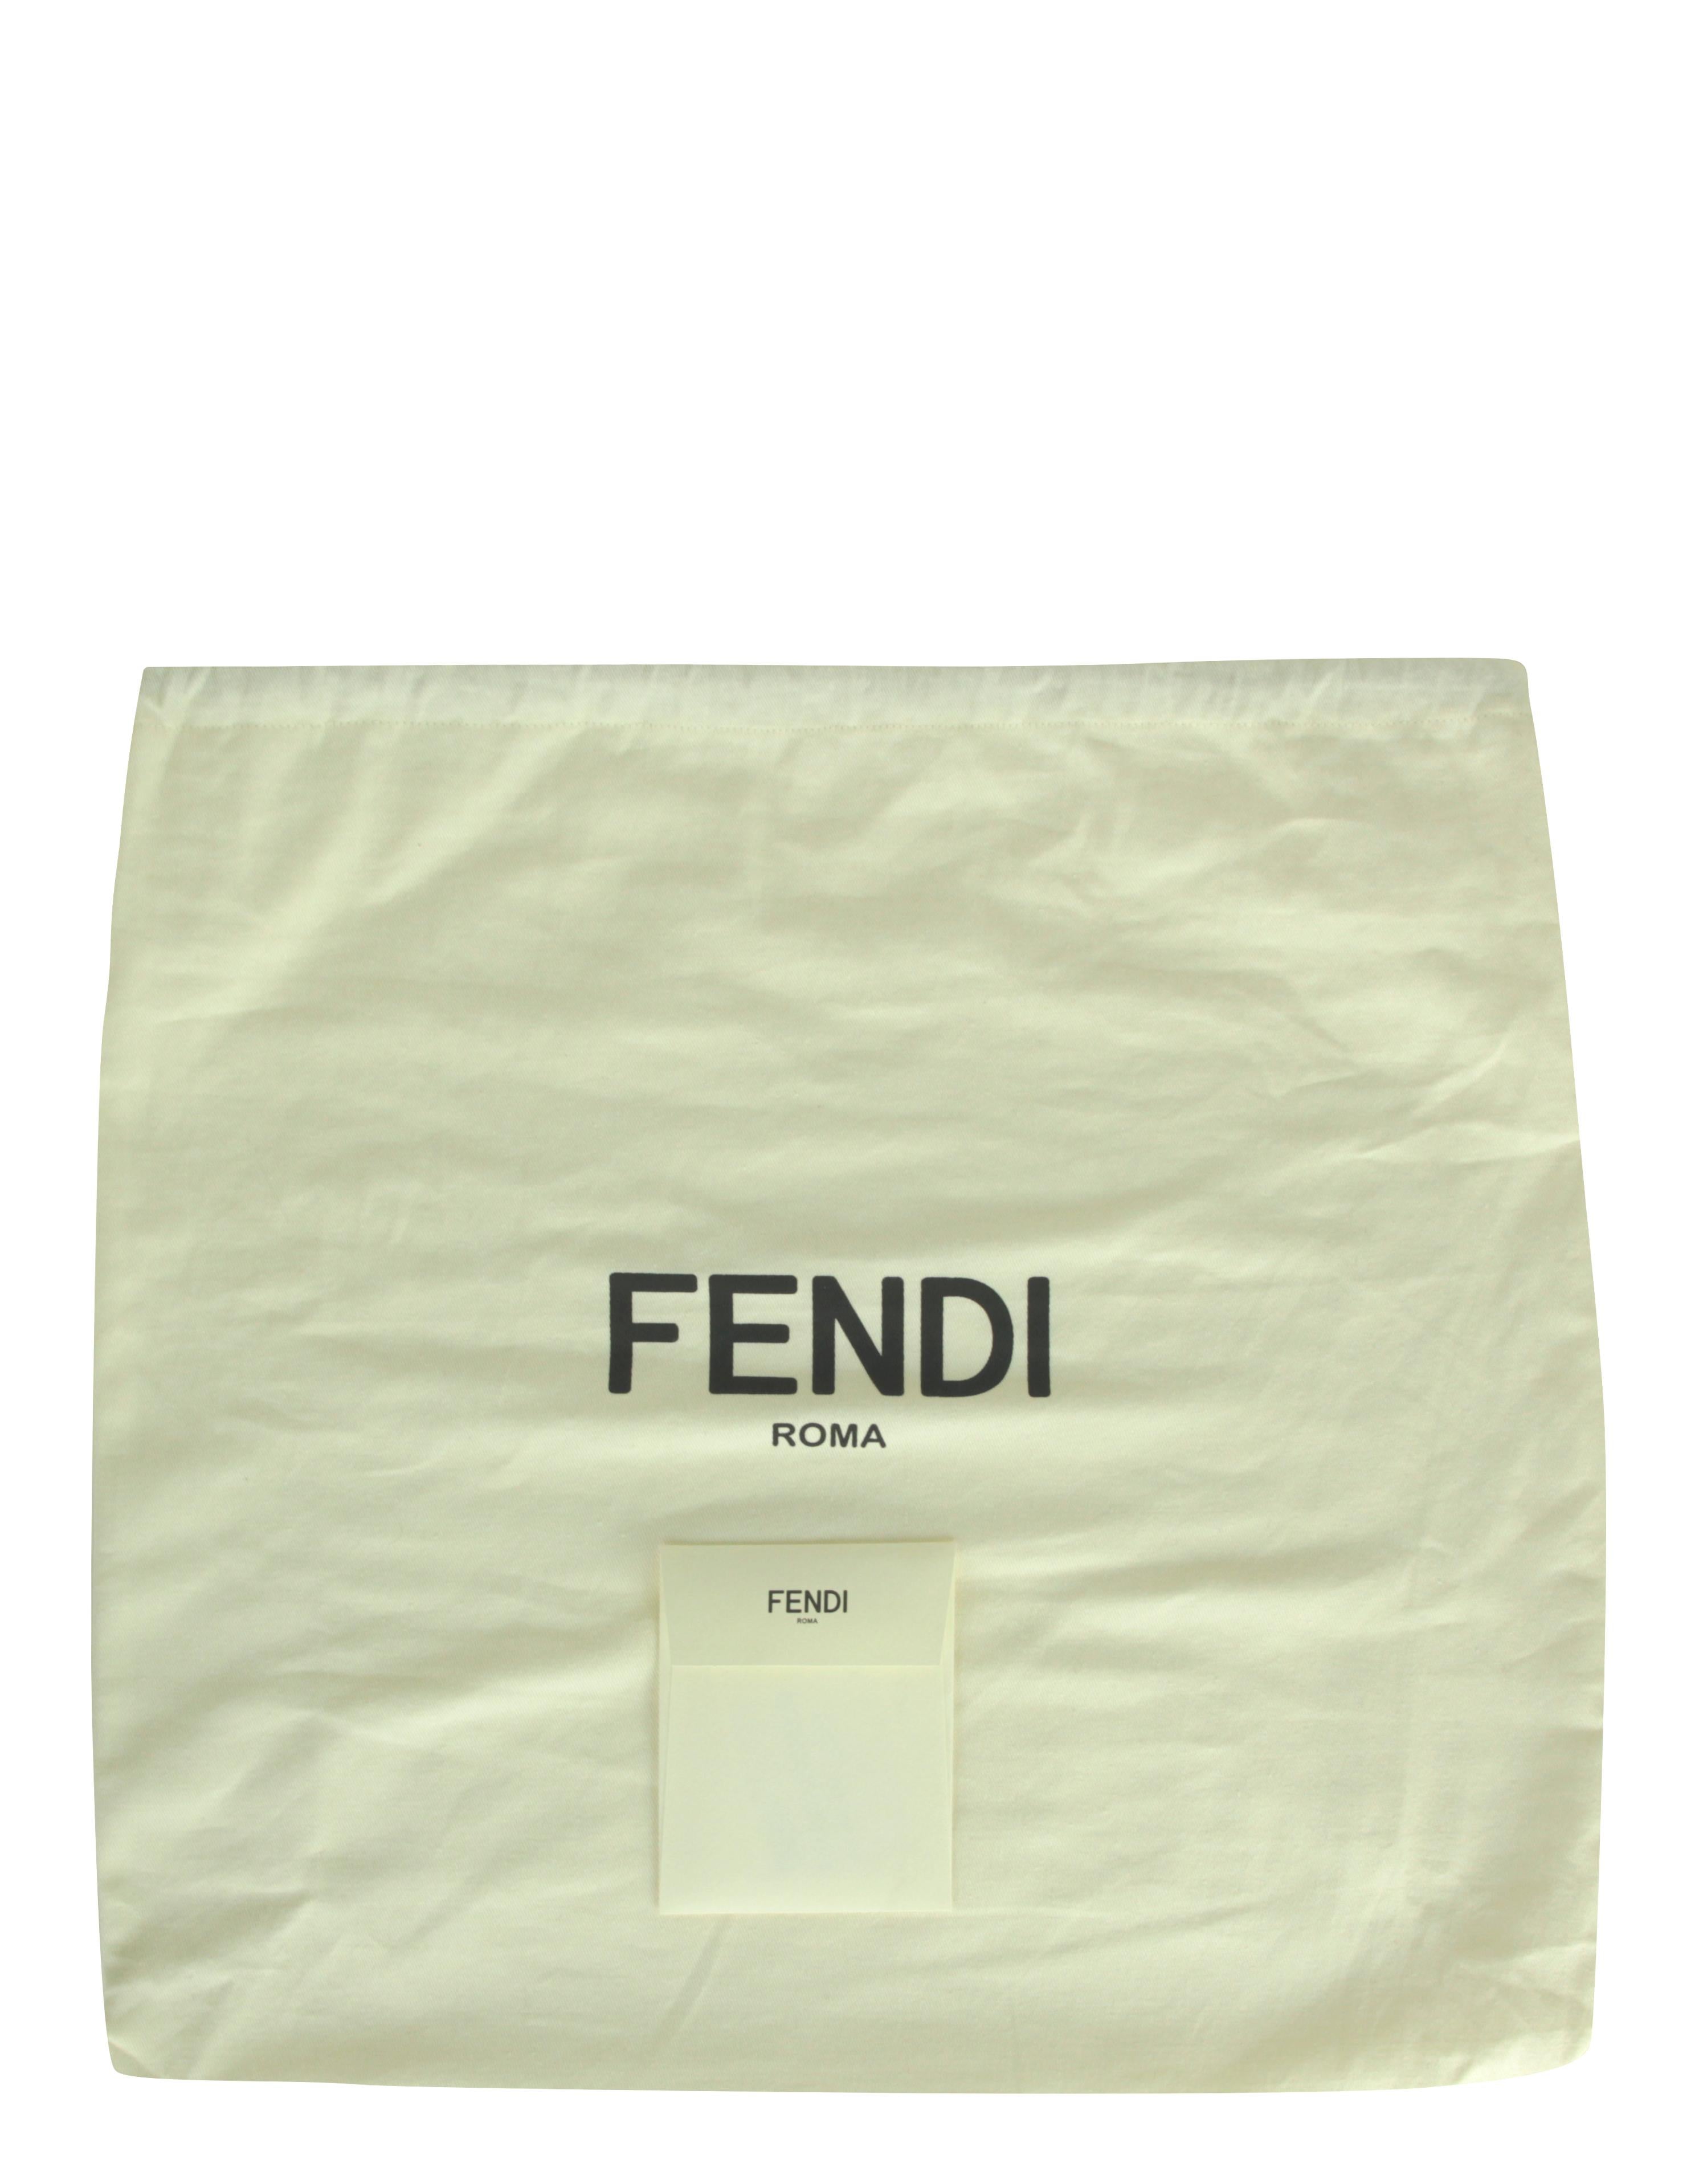 Fendi Light Rose Leather Plexiglass Medium Fendi Sunshine Shopper Tote Bag 3